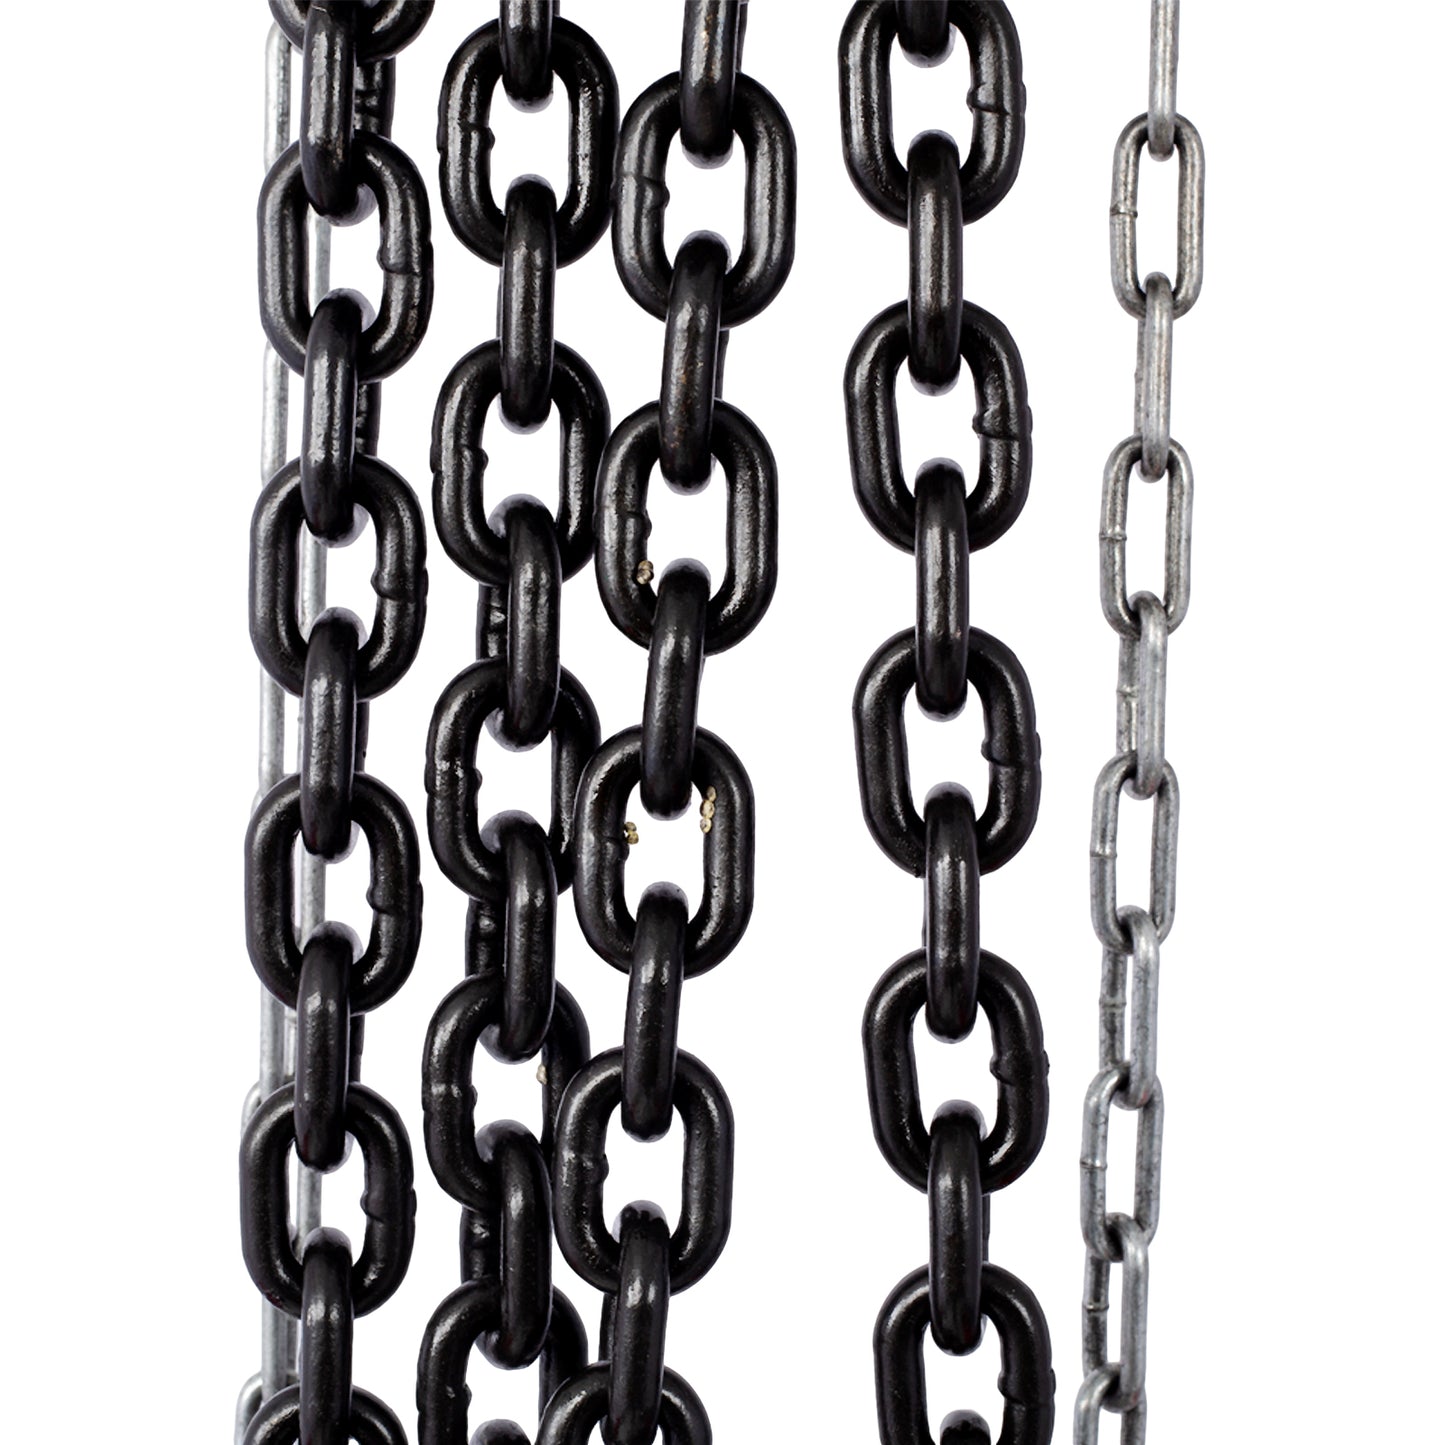 Chain hoist 6600lbs 3T capacity 10ft wIth 2 heavy duty hooks,Manual chain hoist steel construction,Black